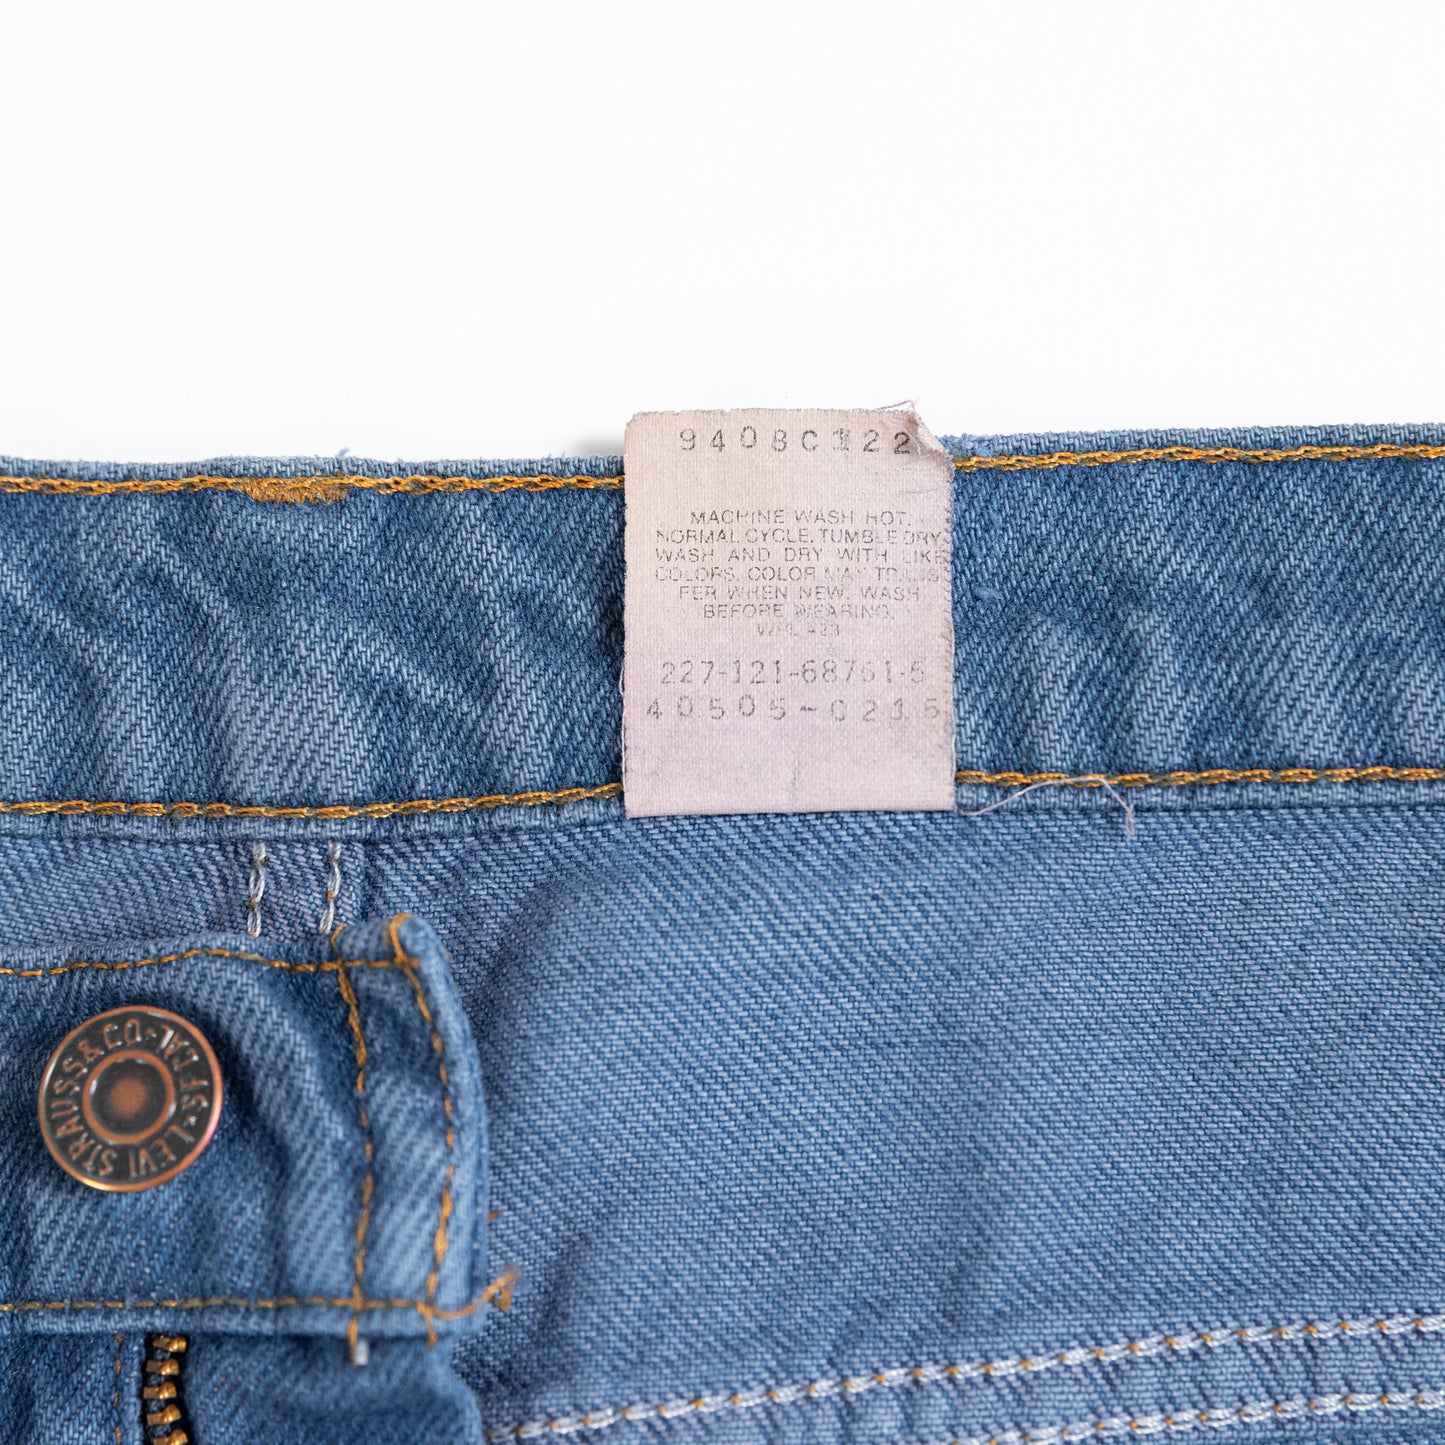 90s Levi's 505 Orange Tab Jeans